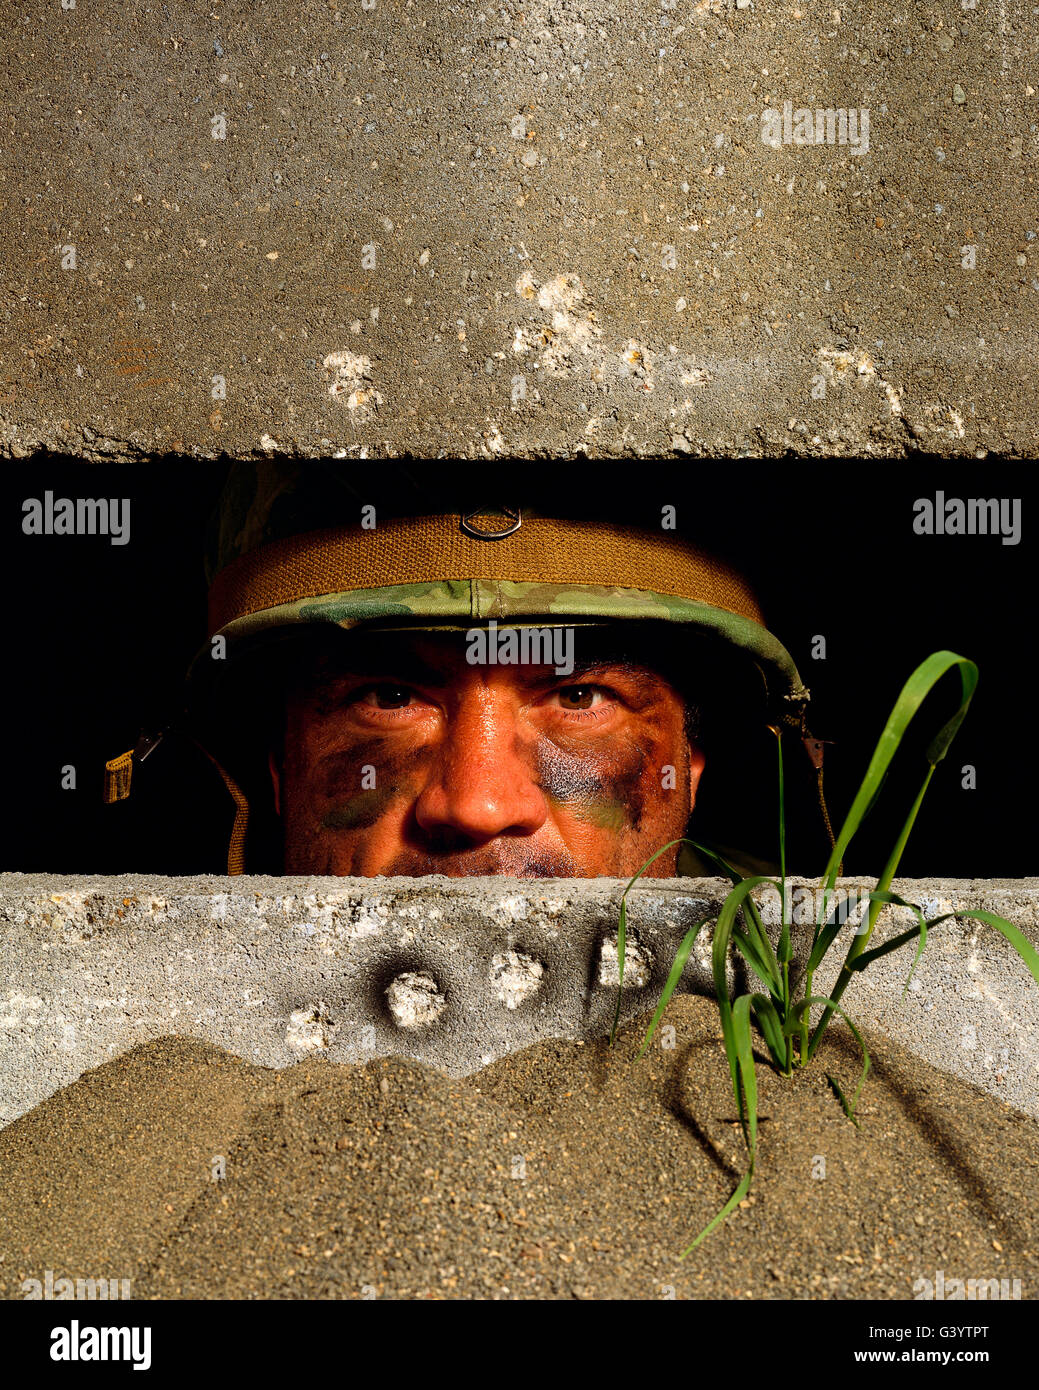 Soldier in bunker Stock Photo